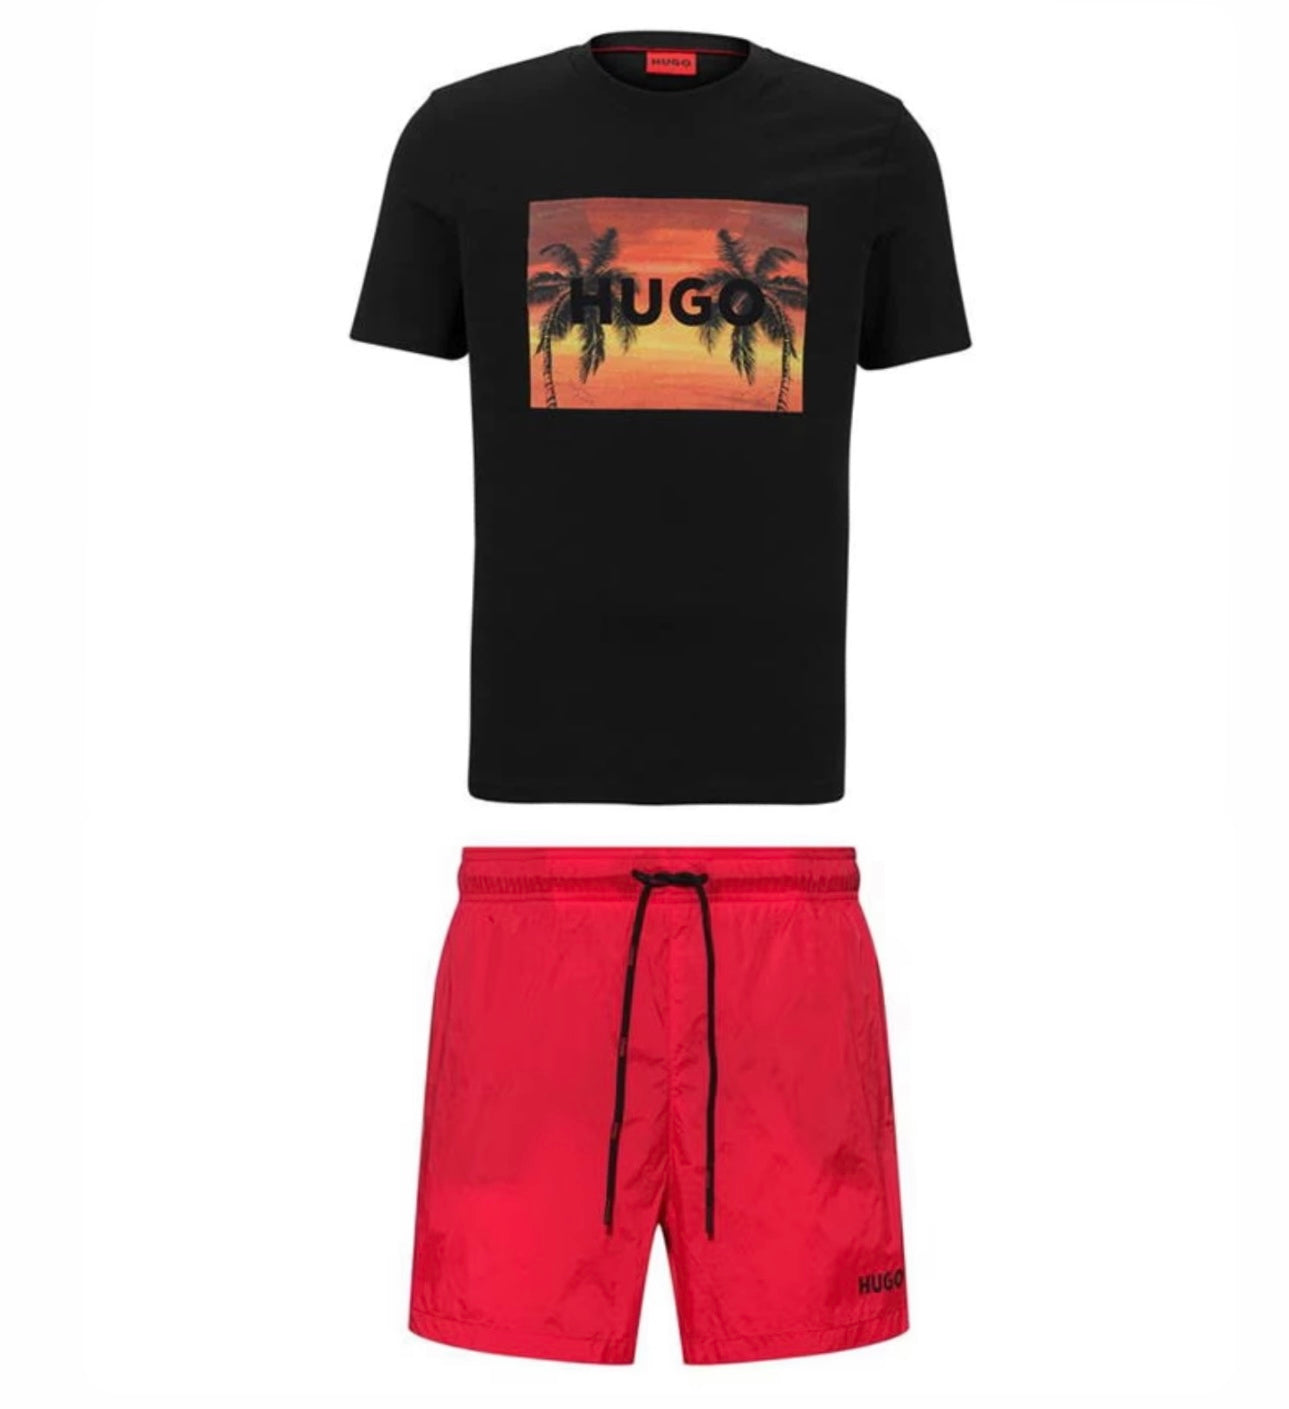 HUGO BOSS HUGO SUNSET T-SHIRT & SWIM SHORTS SET BLACK / RED